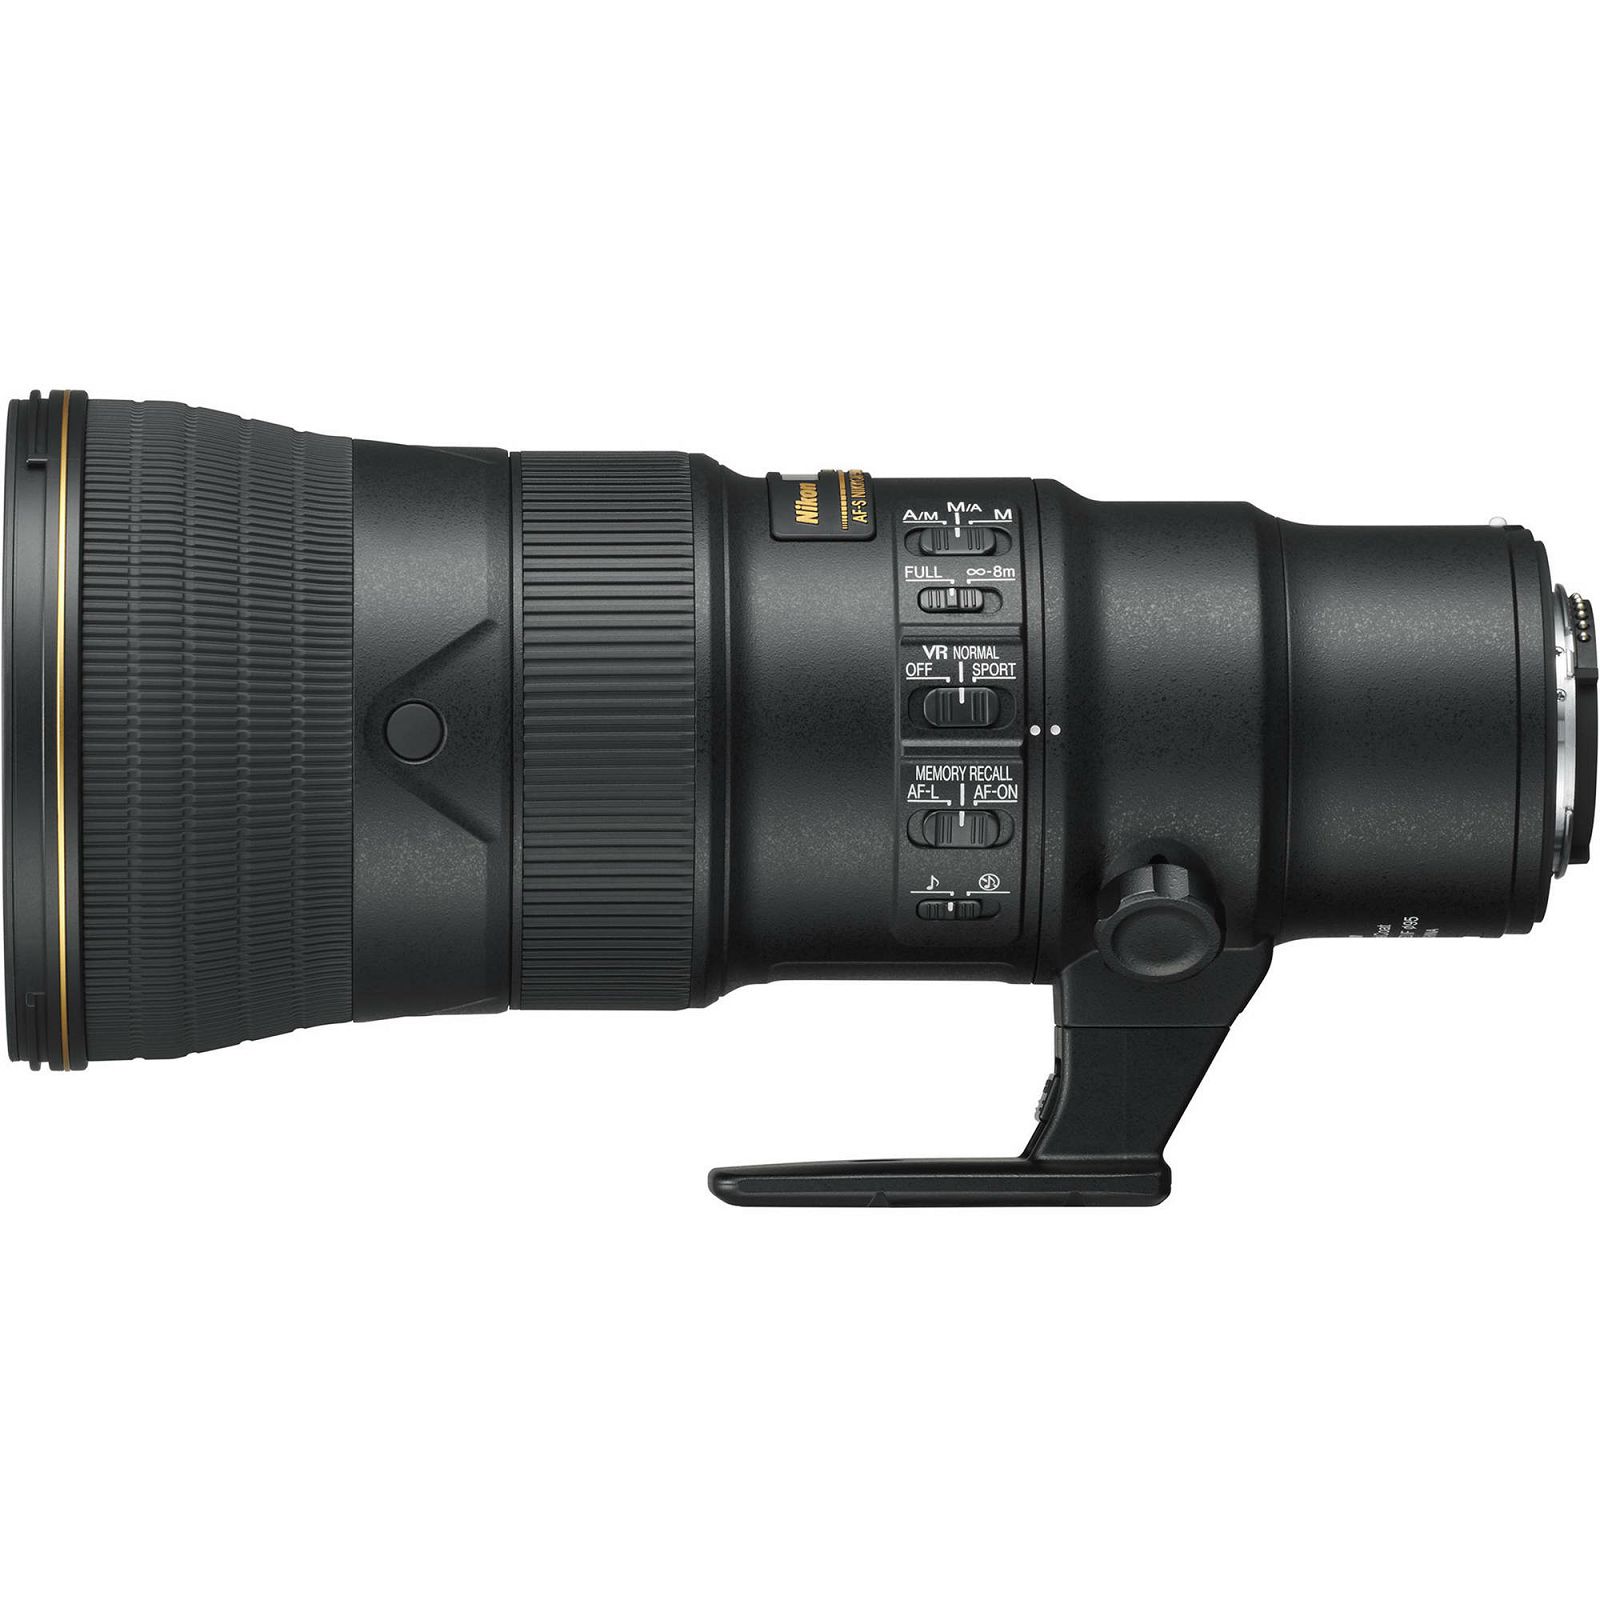 Nikon AF-S 500mm f/5.6E PF ED VR FX telefoto objektiv Nikkor auto focus zoom lens (JAA535DA)